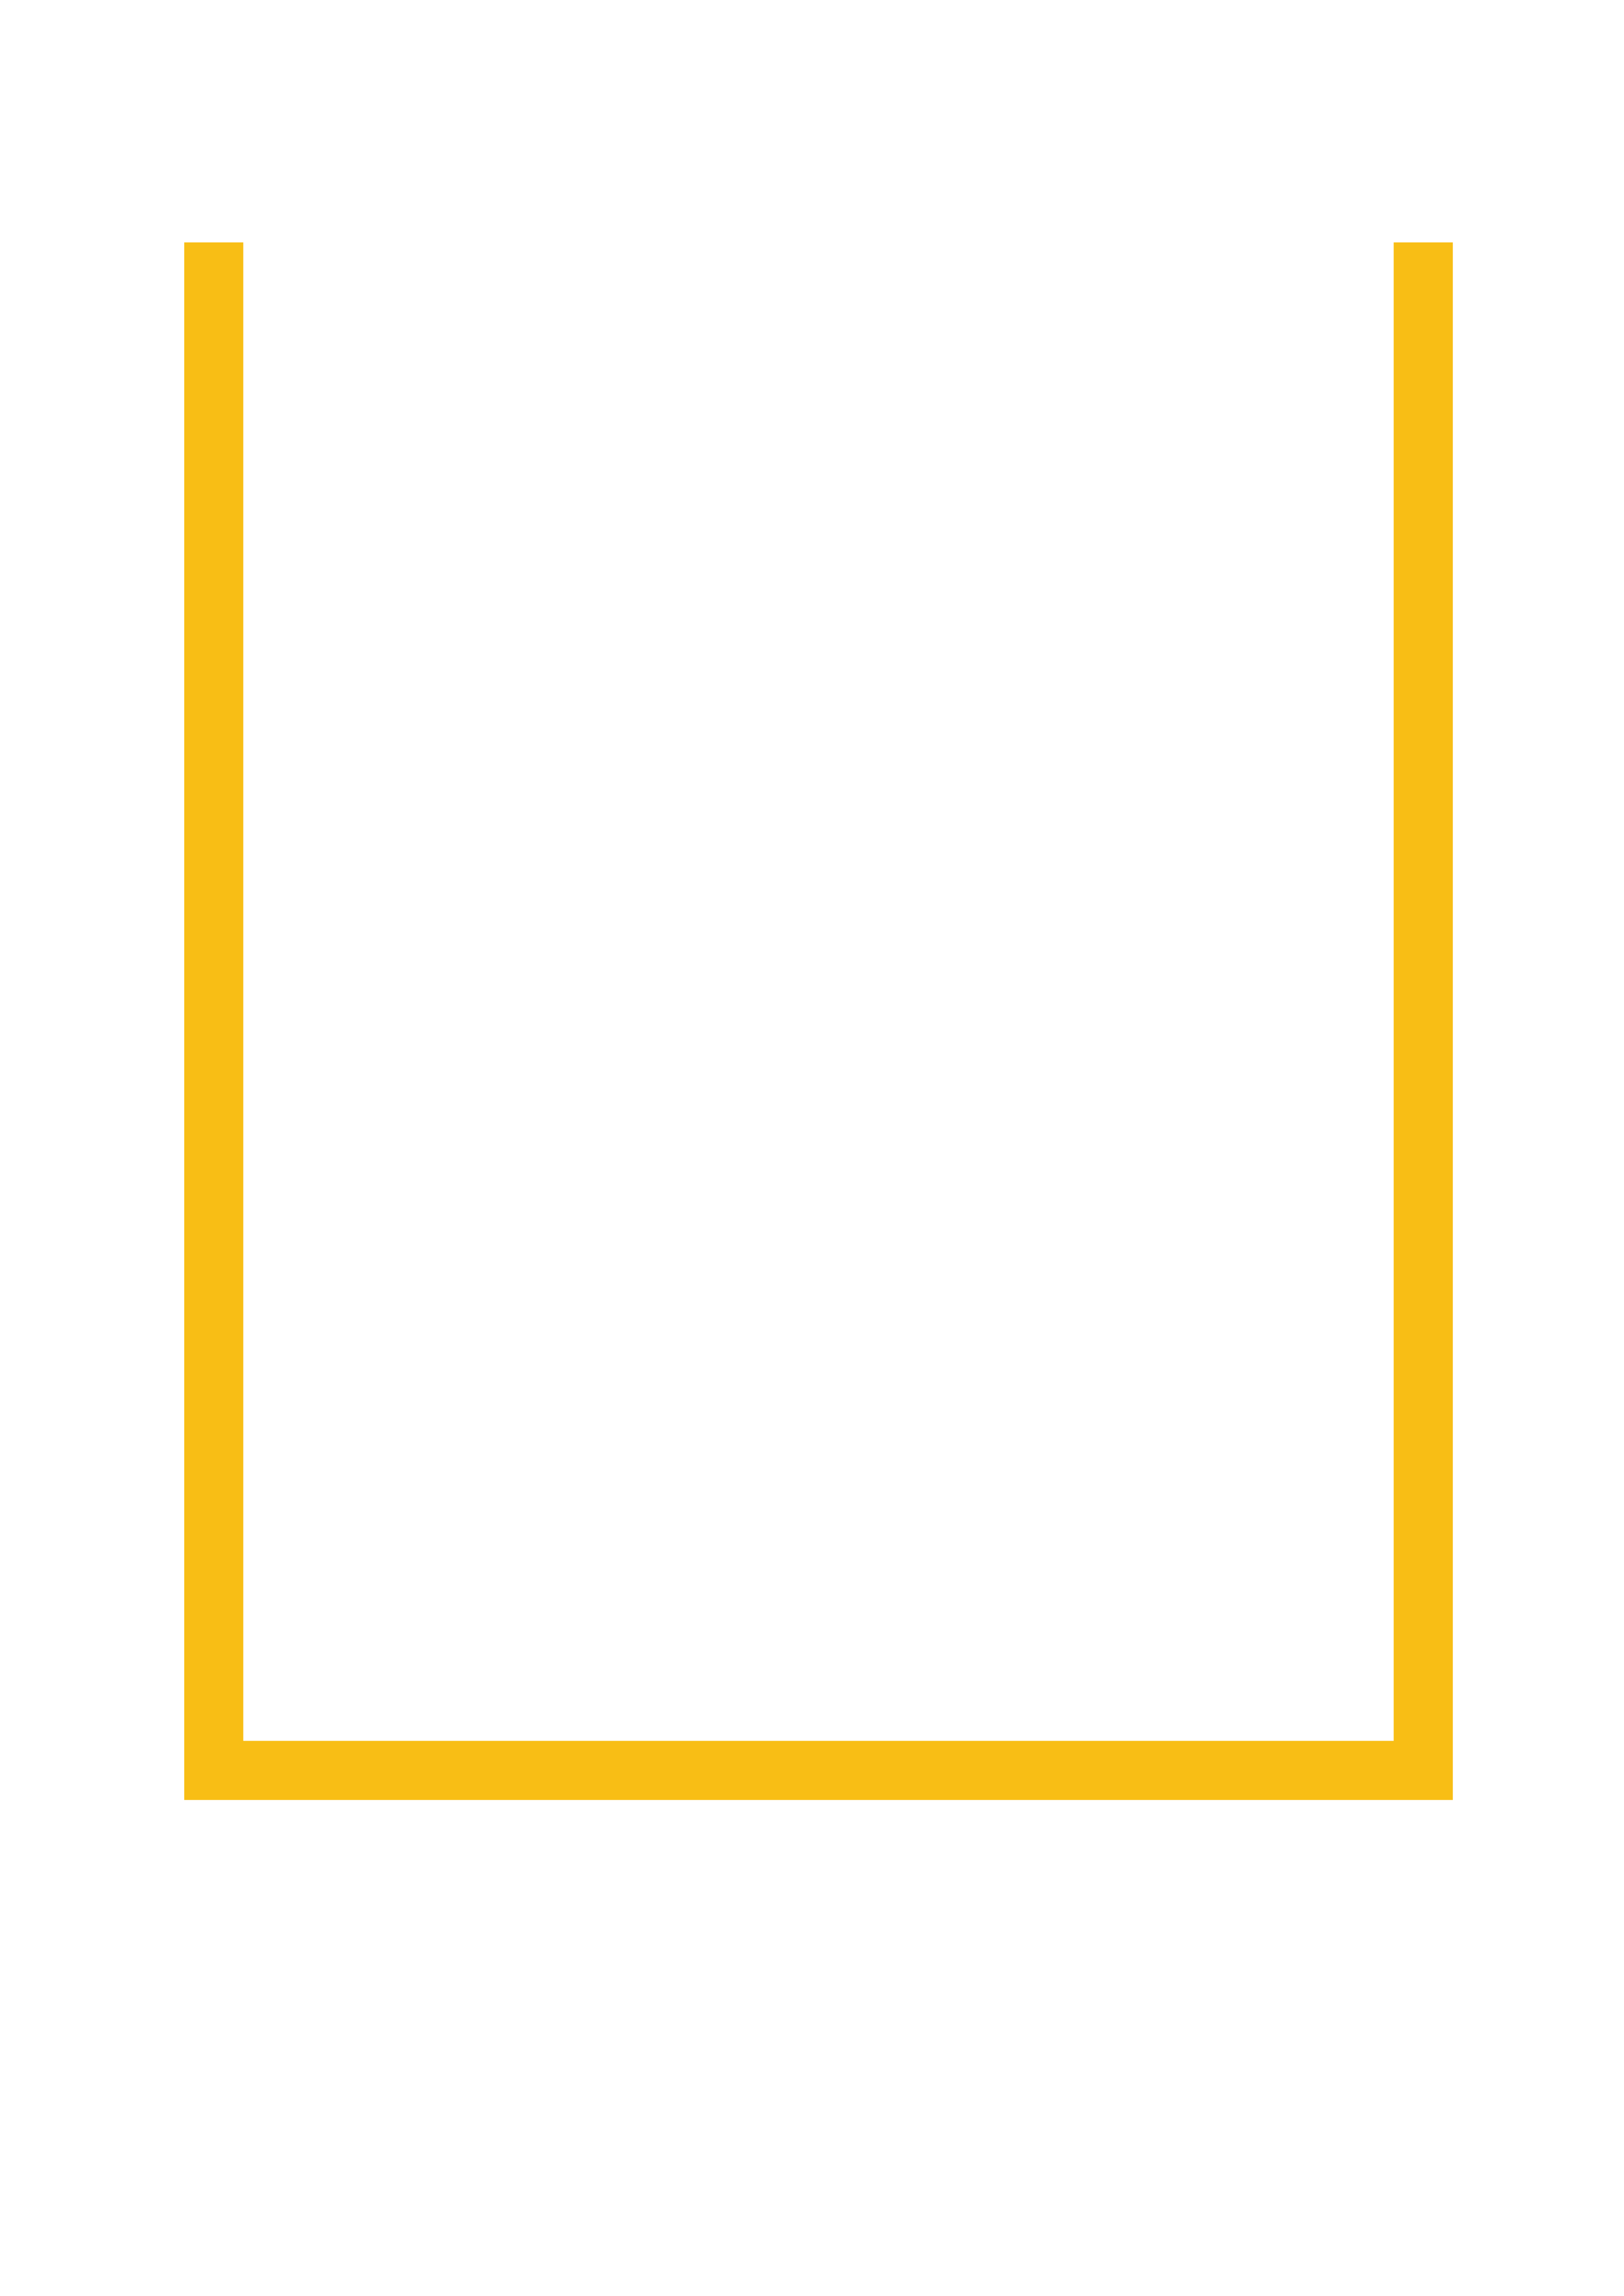 PPID Riau